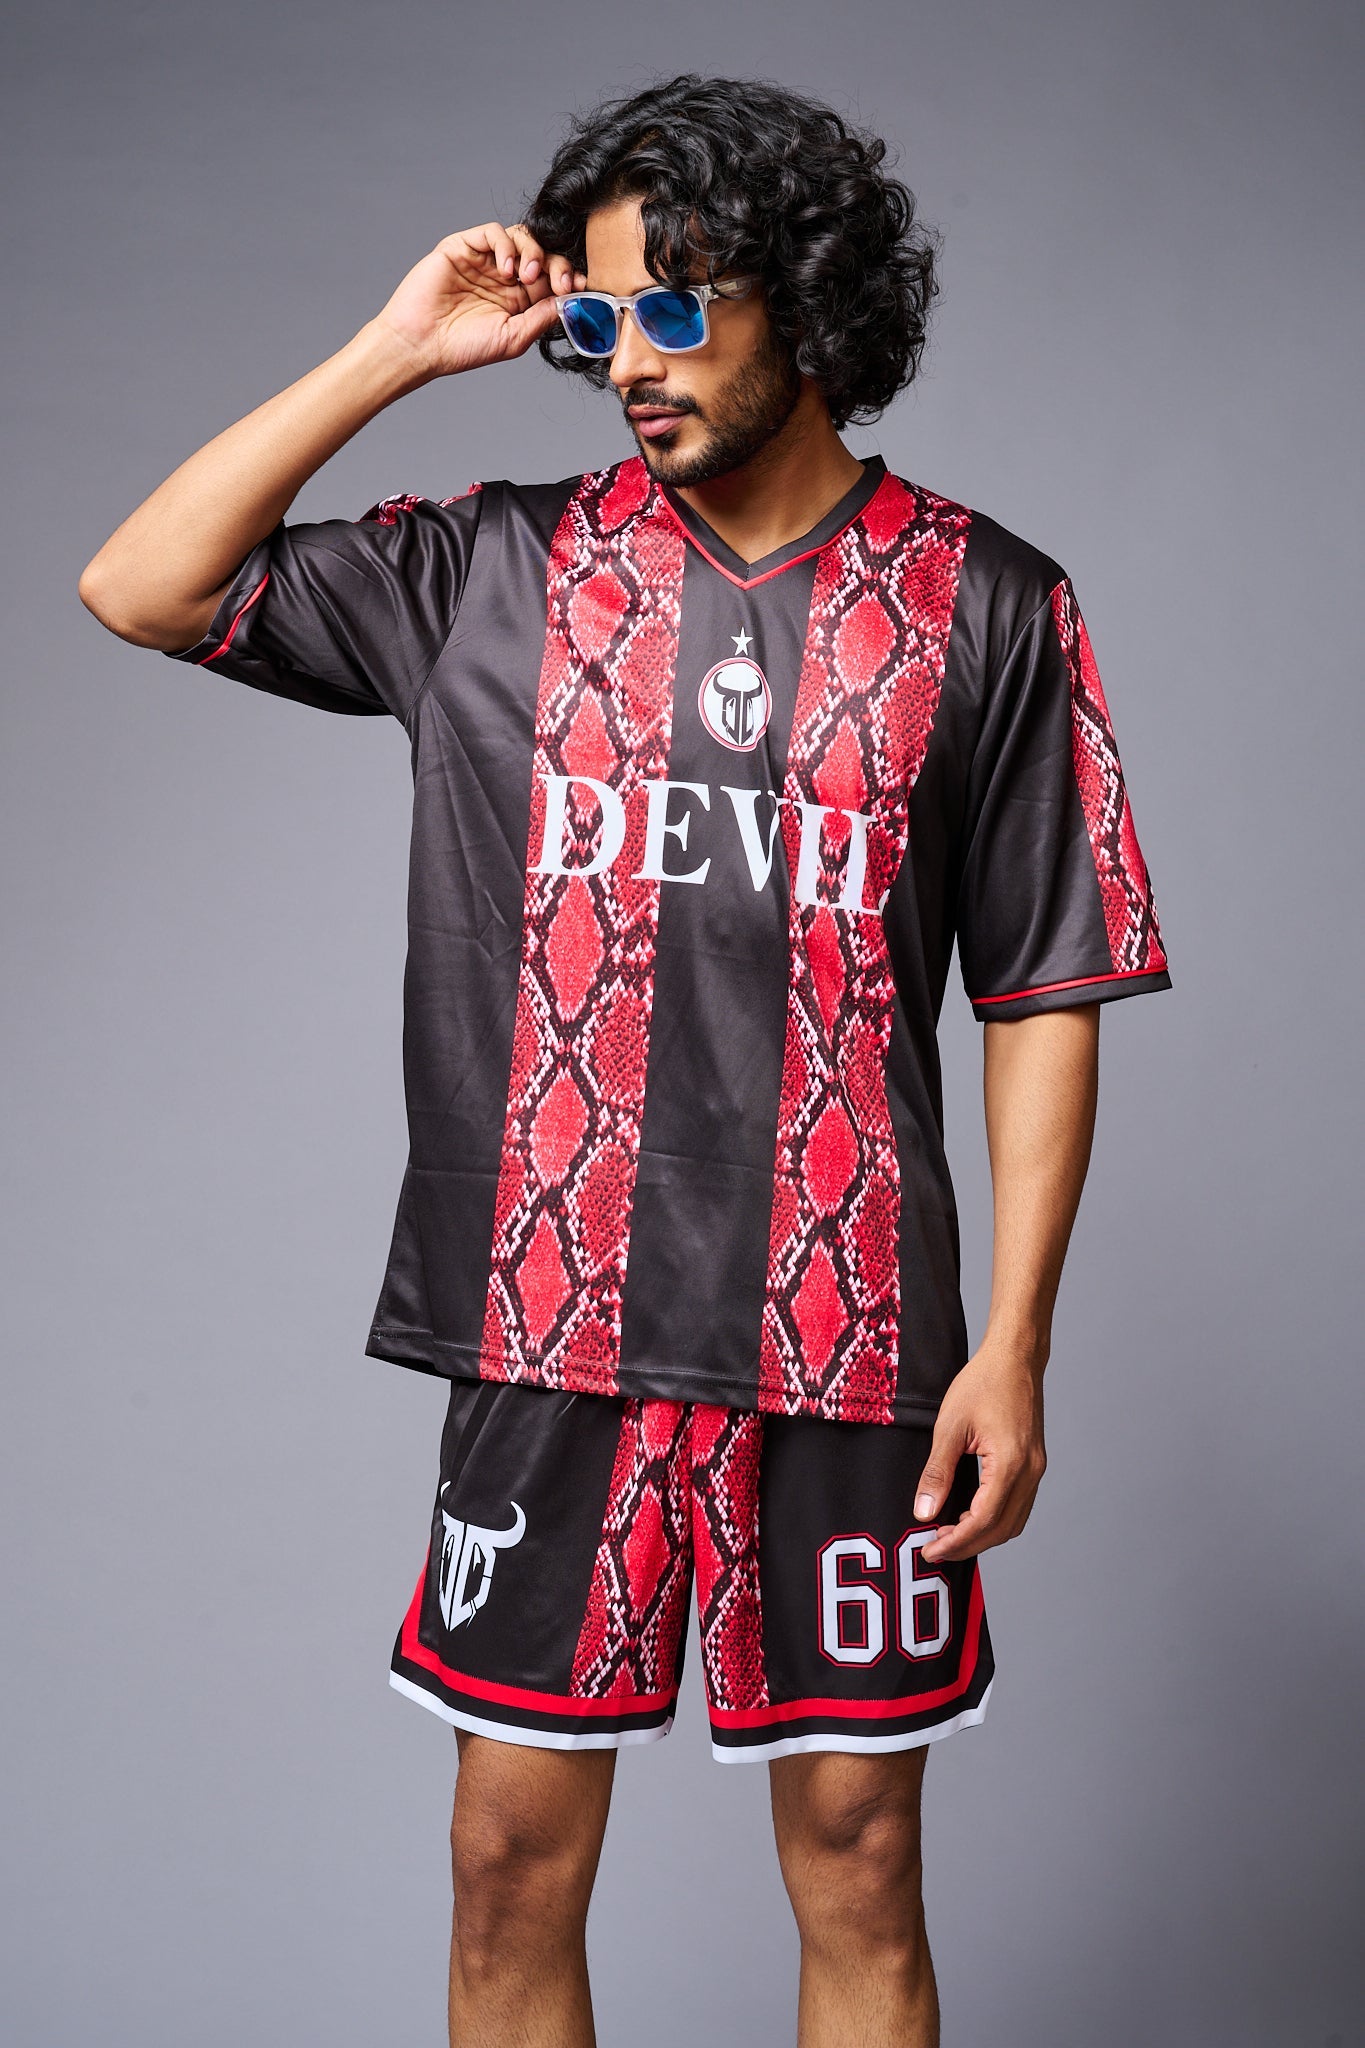 Devil Printed Snake Design Red & Black Premium Co-ord Set for Men - Go Devil